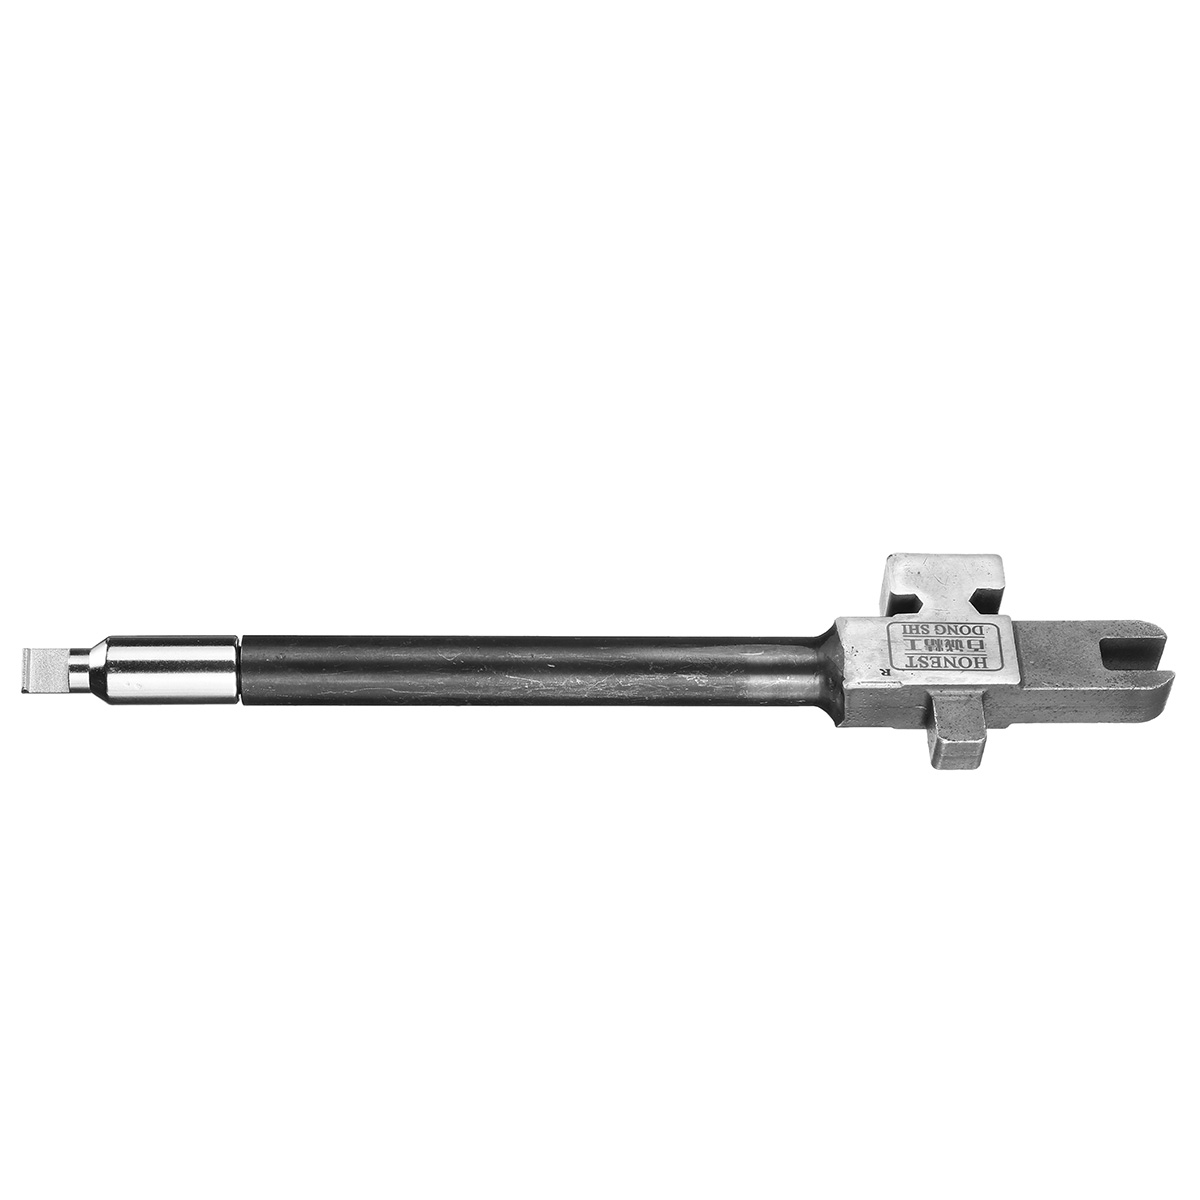 Locksmith-Supplies-Locksmith-Repair-Tools-Emergency-Lock-Cylinder-5-in-1-Twist-off-Consumables-1871446-8